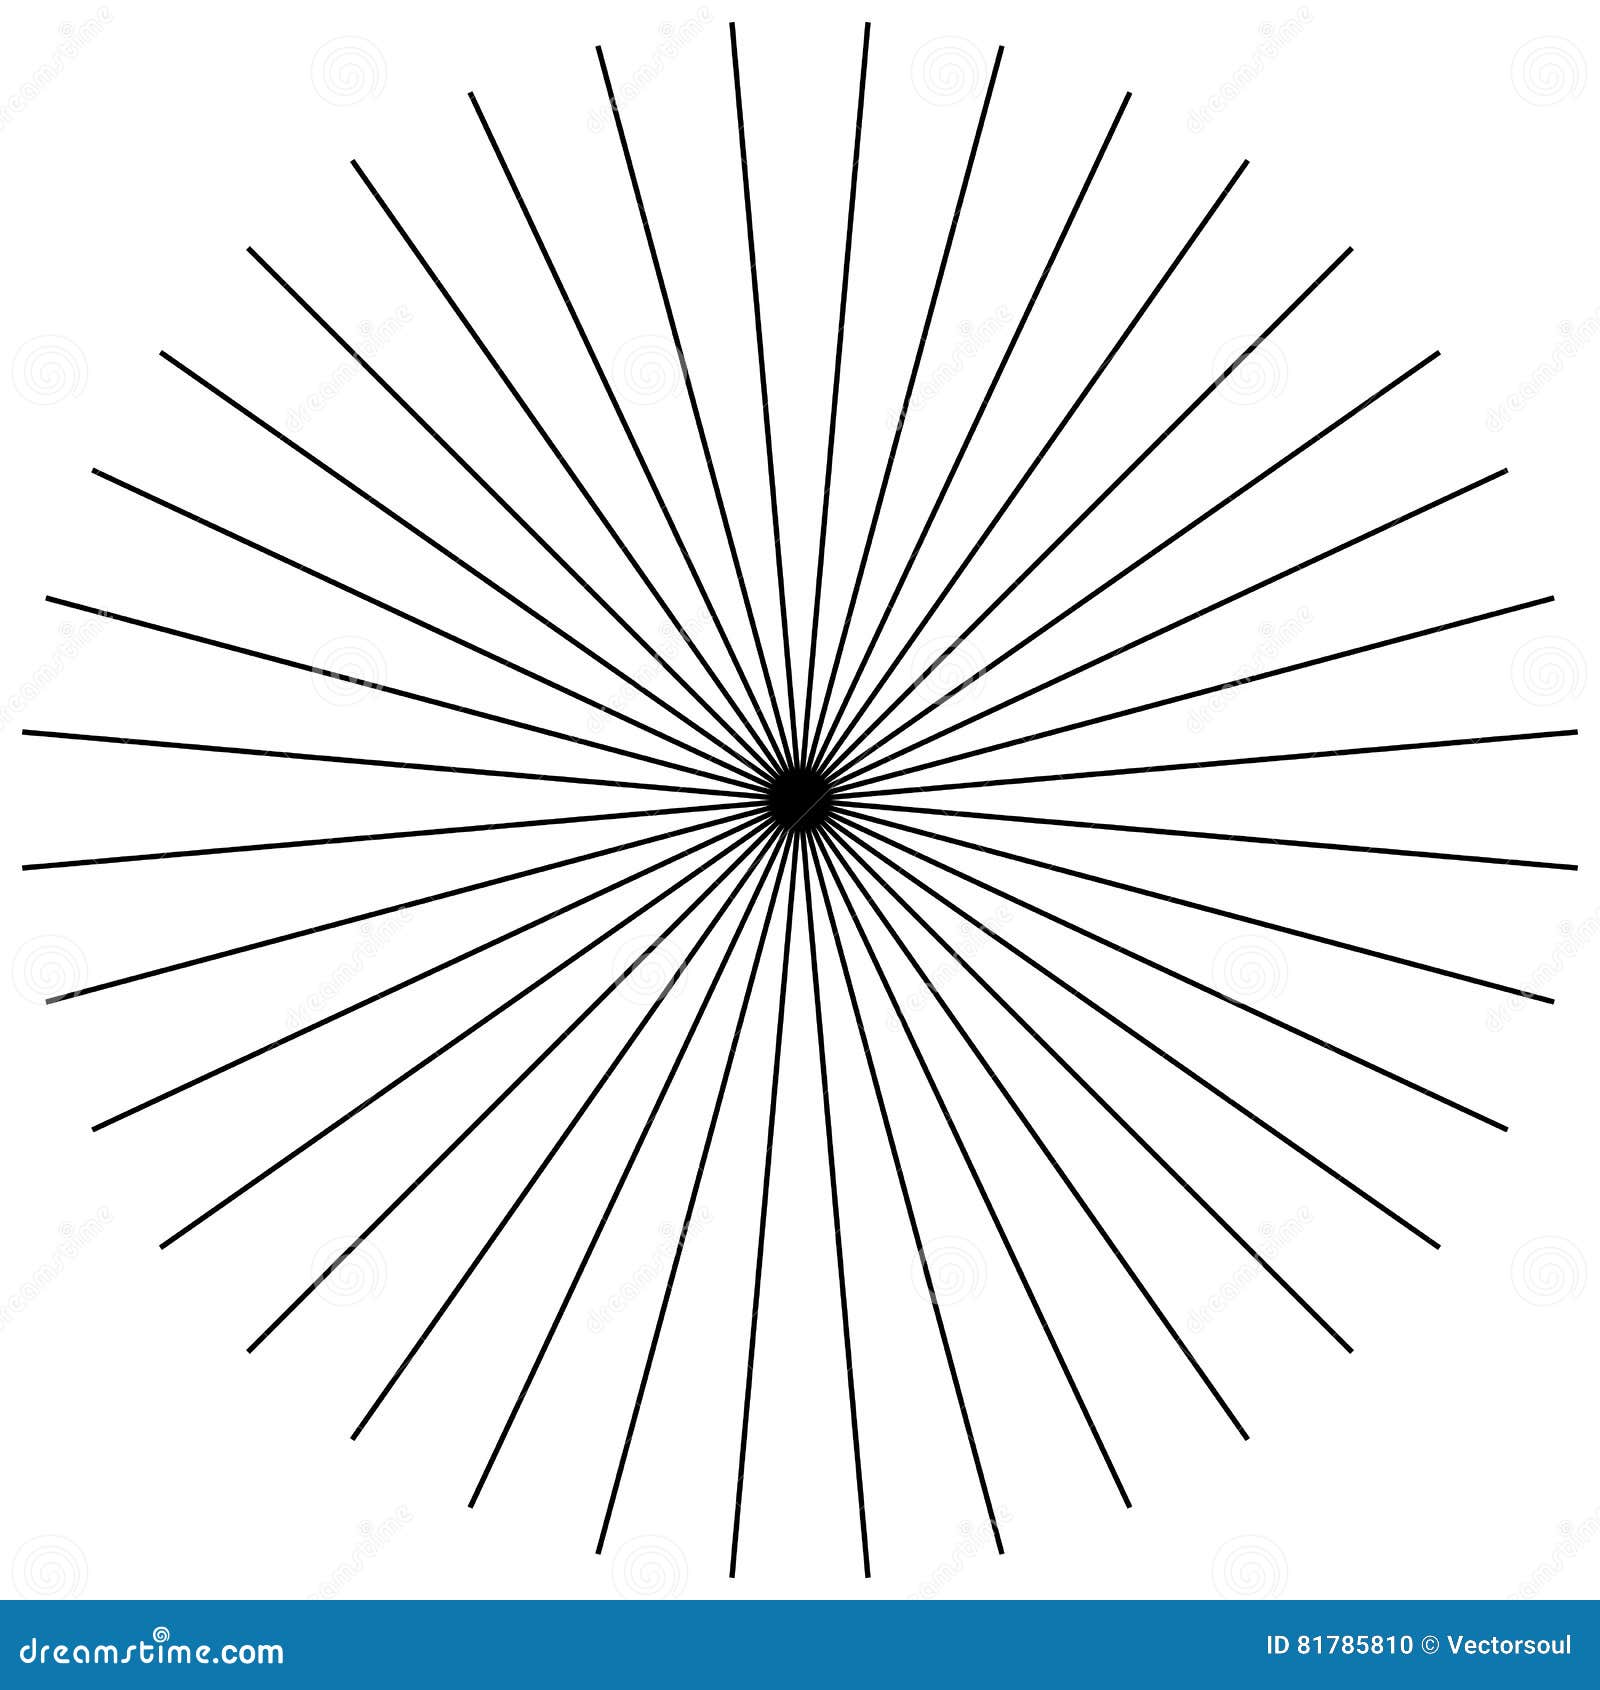 radial, radiating straight thin lines. circular black and white